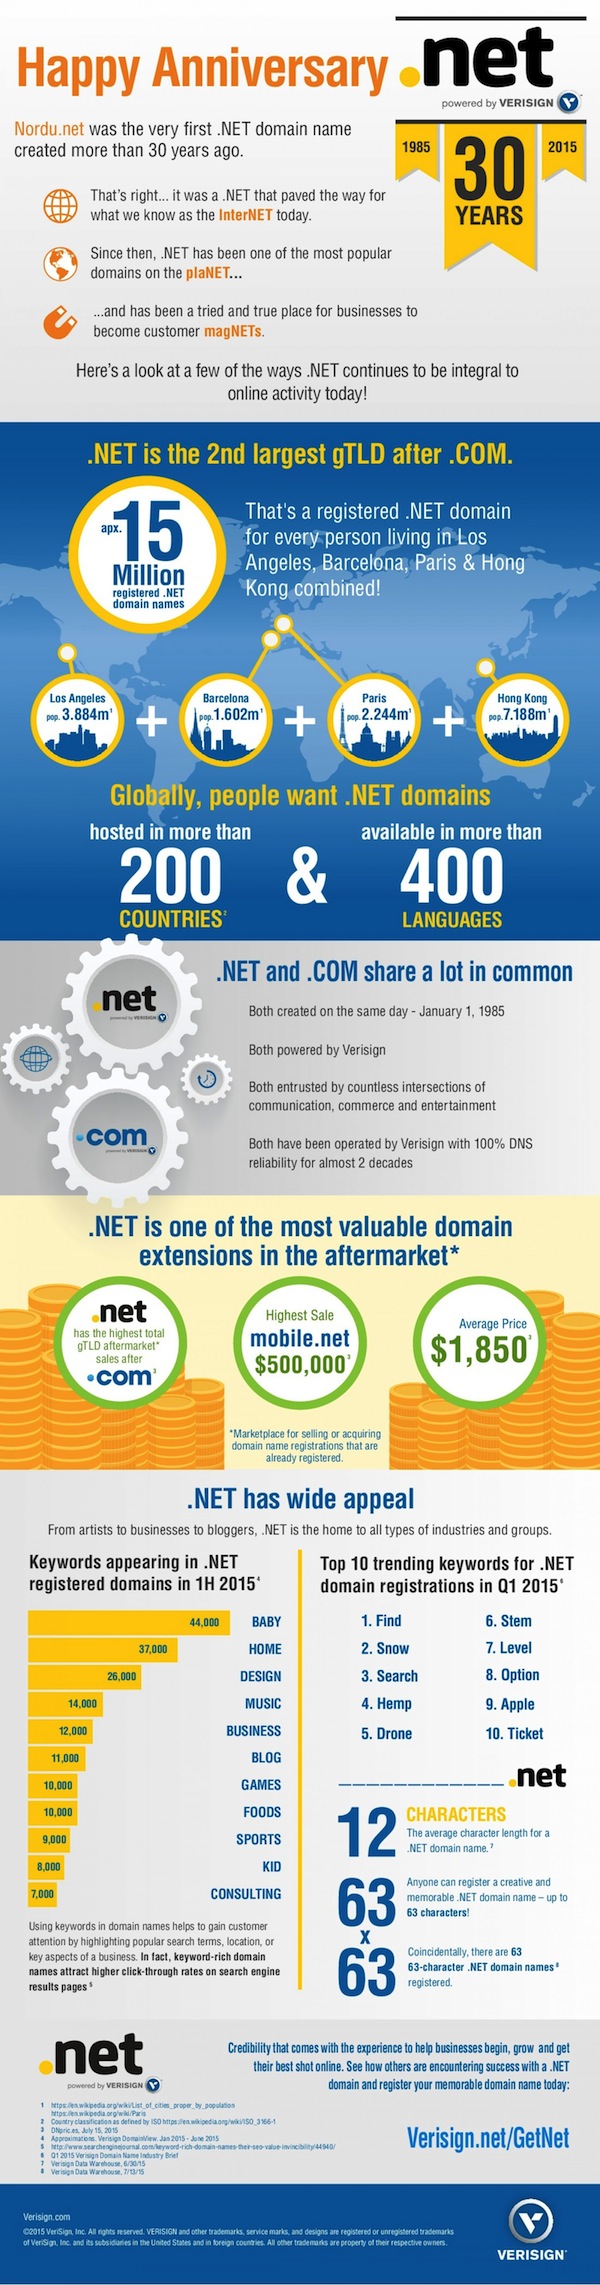 NET 30th Anniversary Infographic